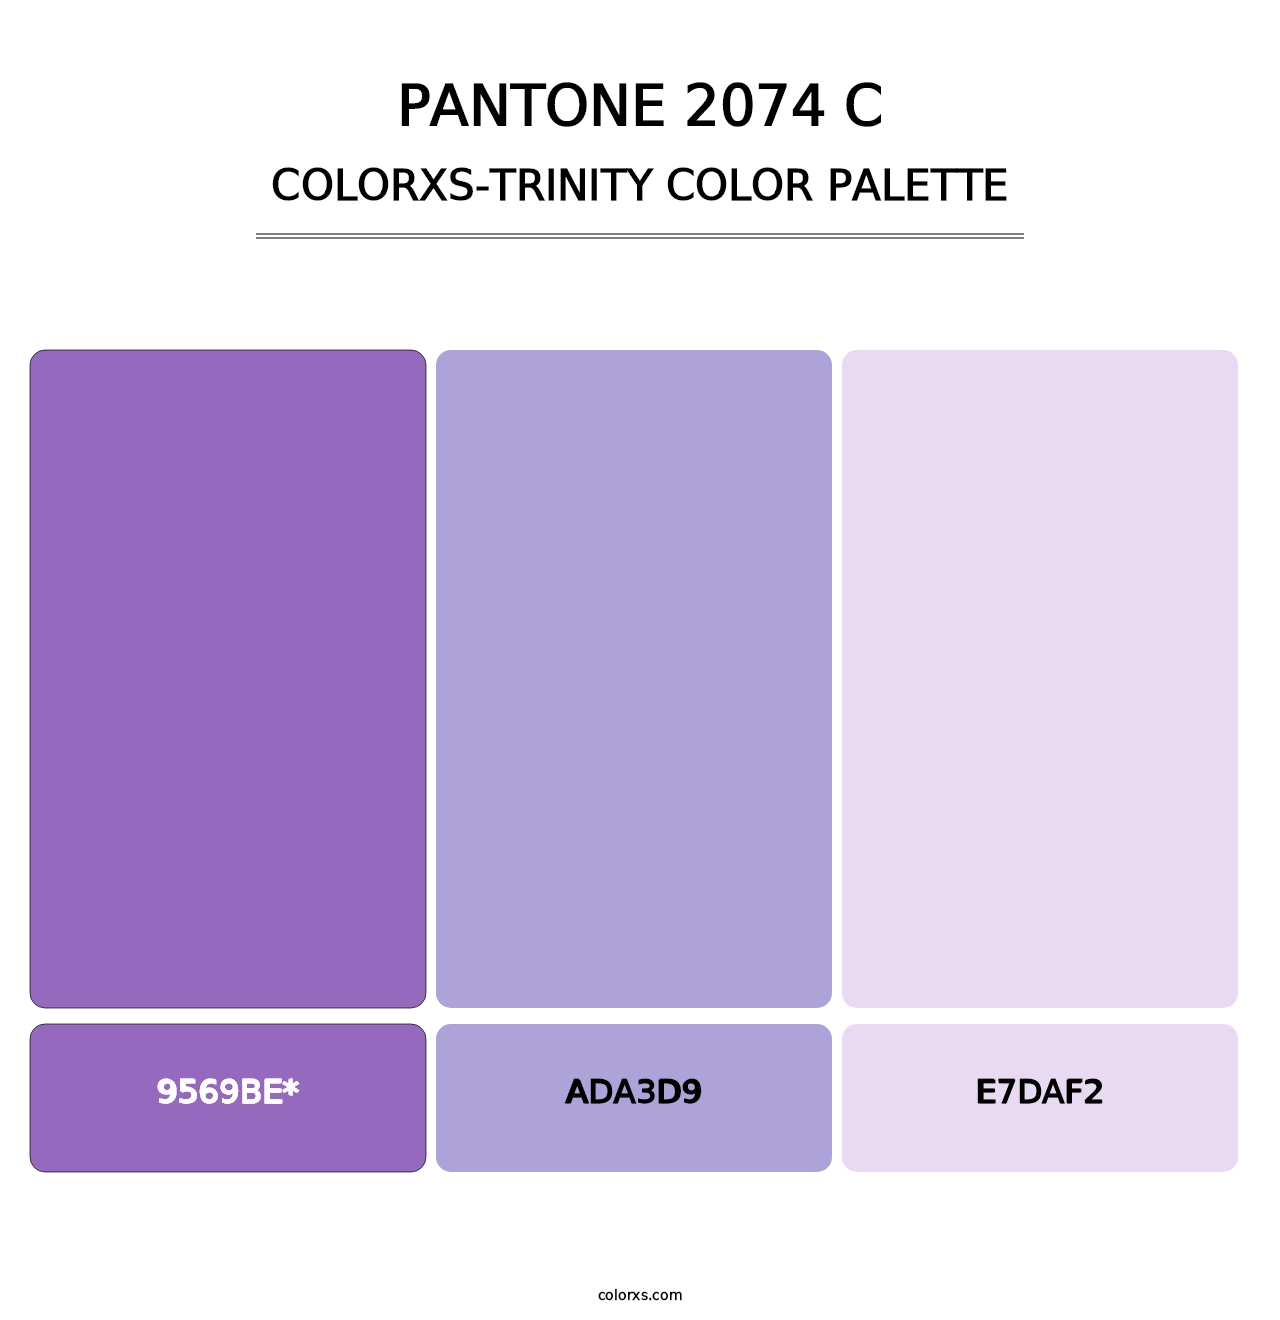 PANTONE 2074 C - Colorxs Trinity Palette